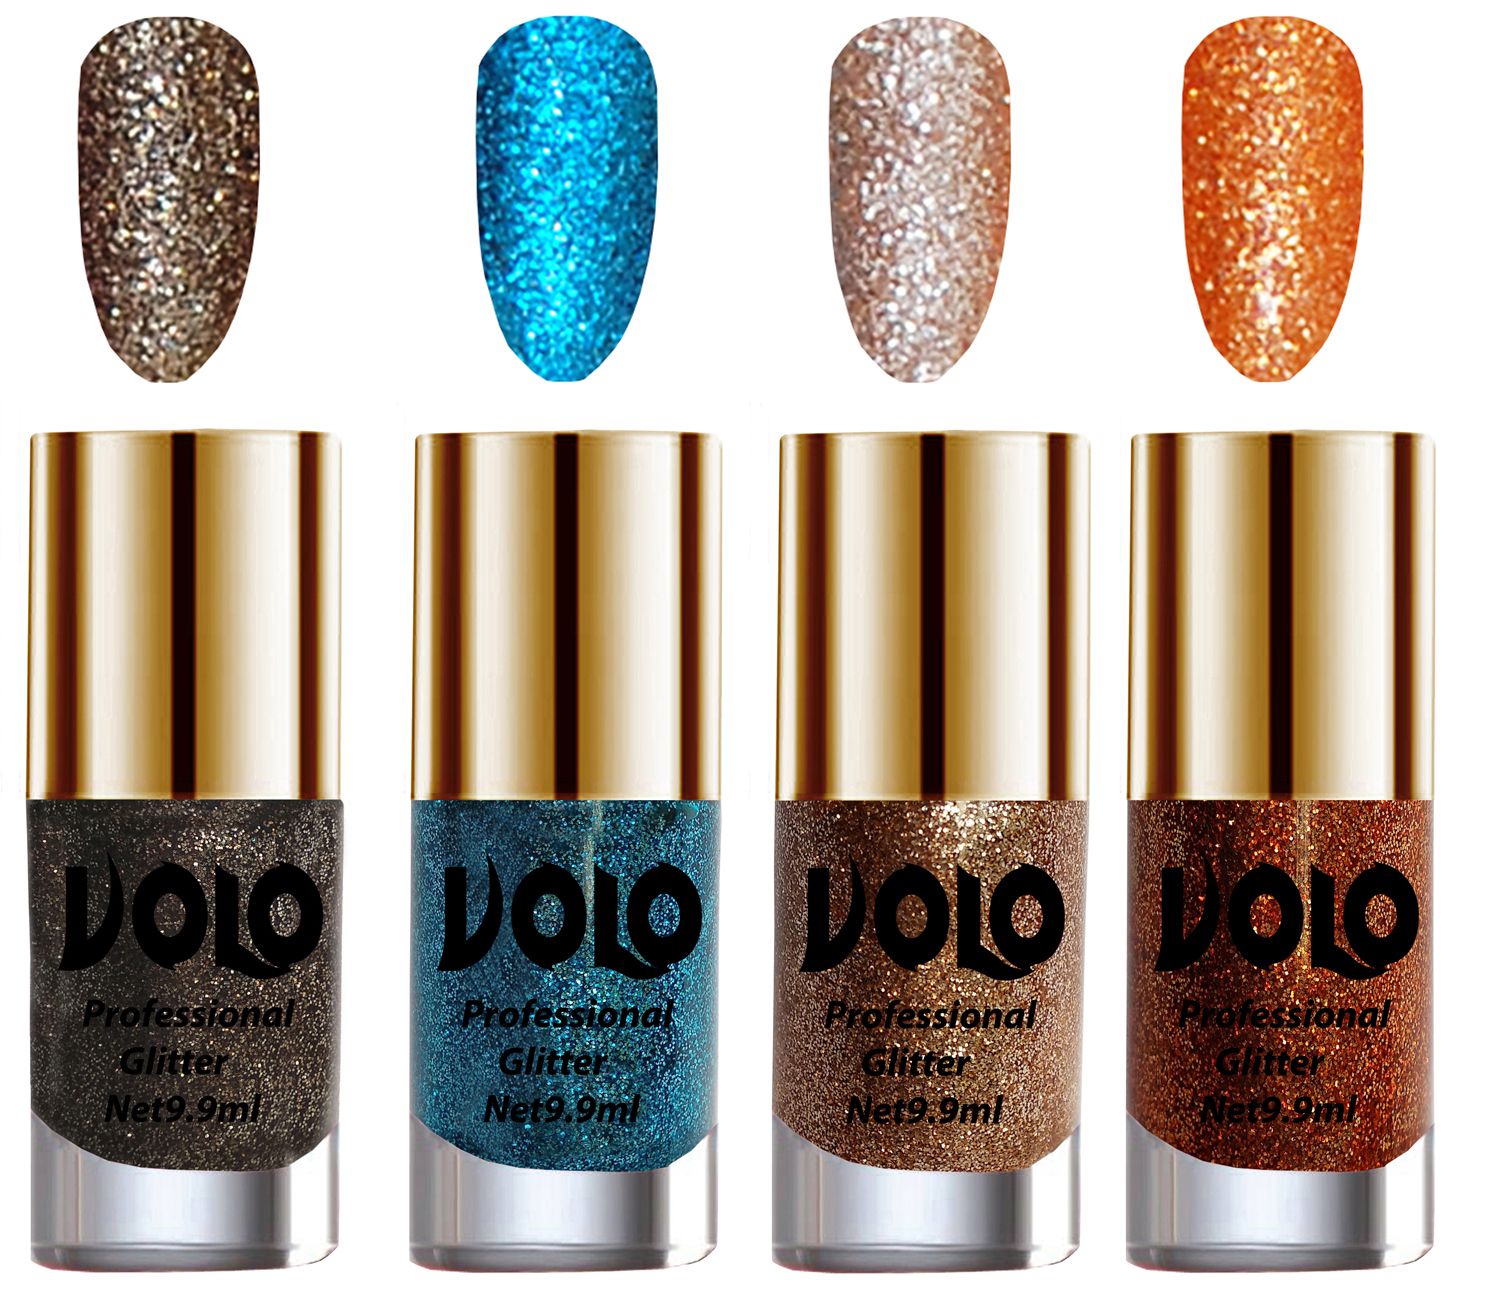     			VOLO Professionally Used Glitter Shine Nail Polish Grey,Blue,Gold Orange Pack of 4 39 mL